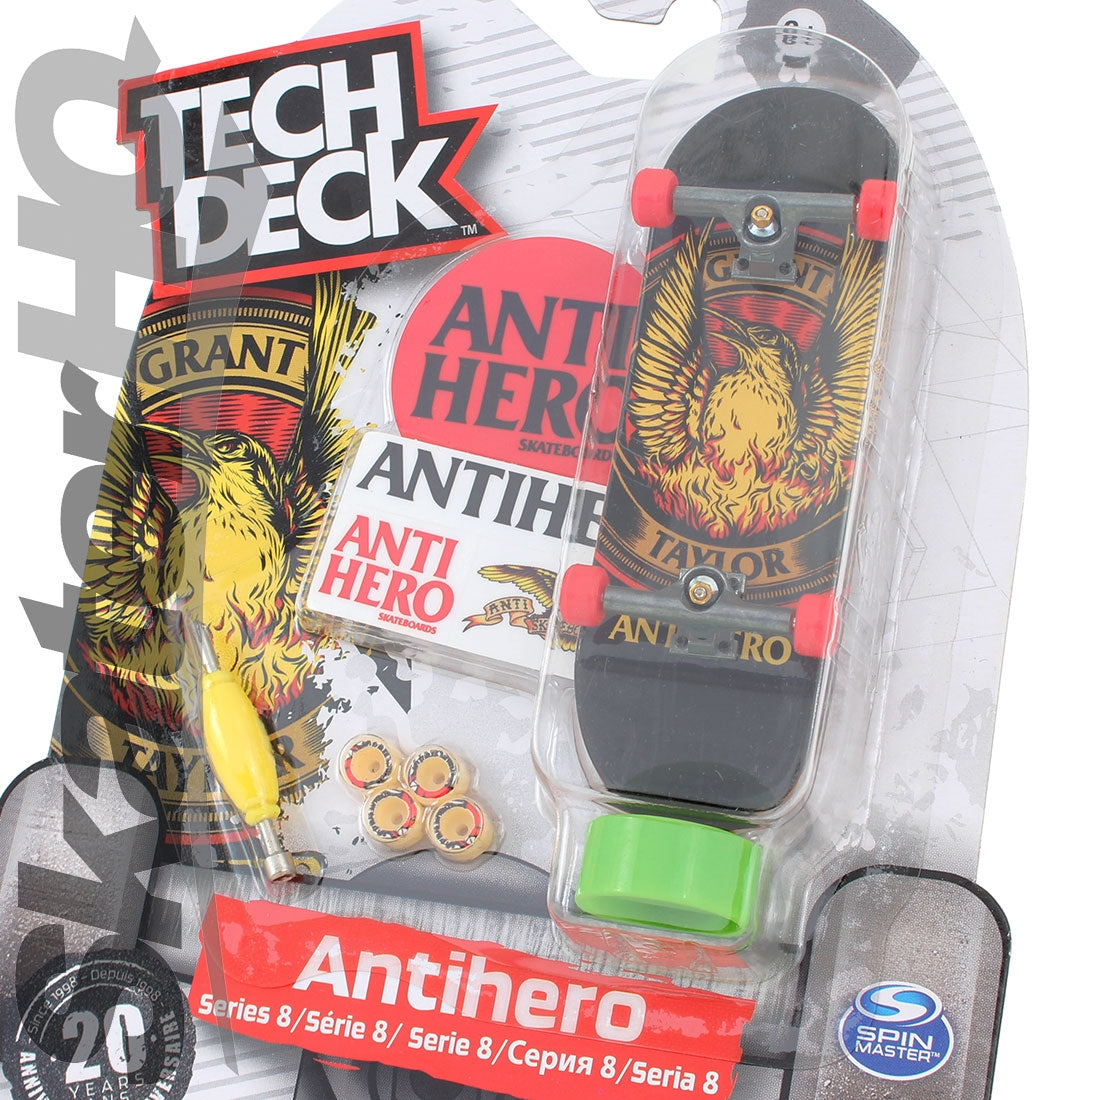 Tech Deck Series 8 - Antihero - Grant Taylor Skateboard Accessories